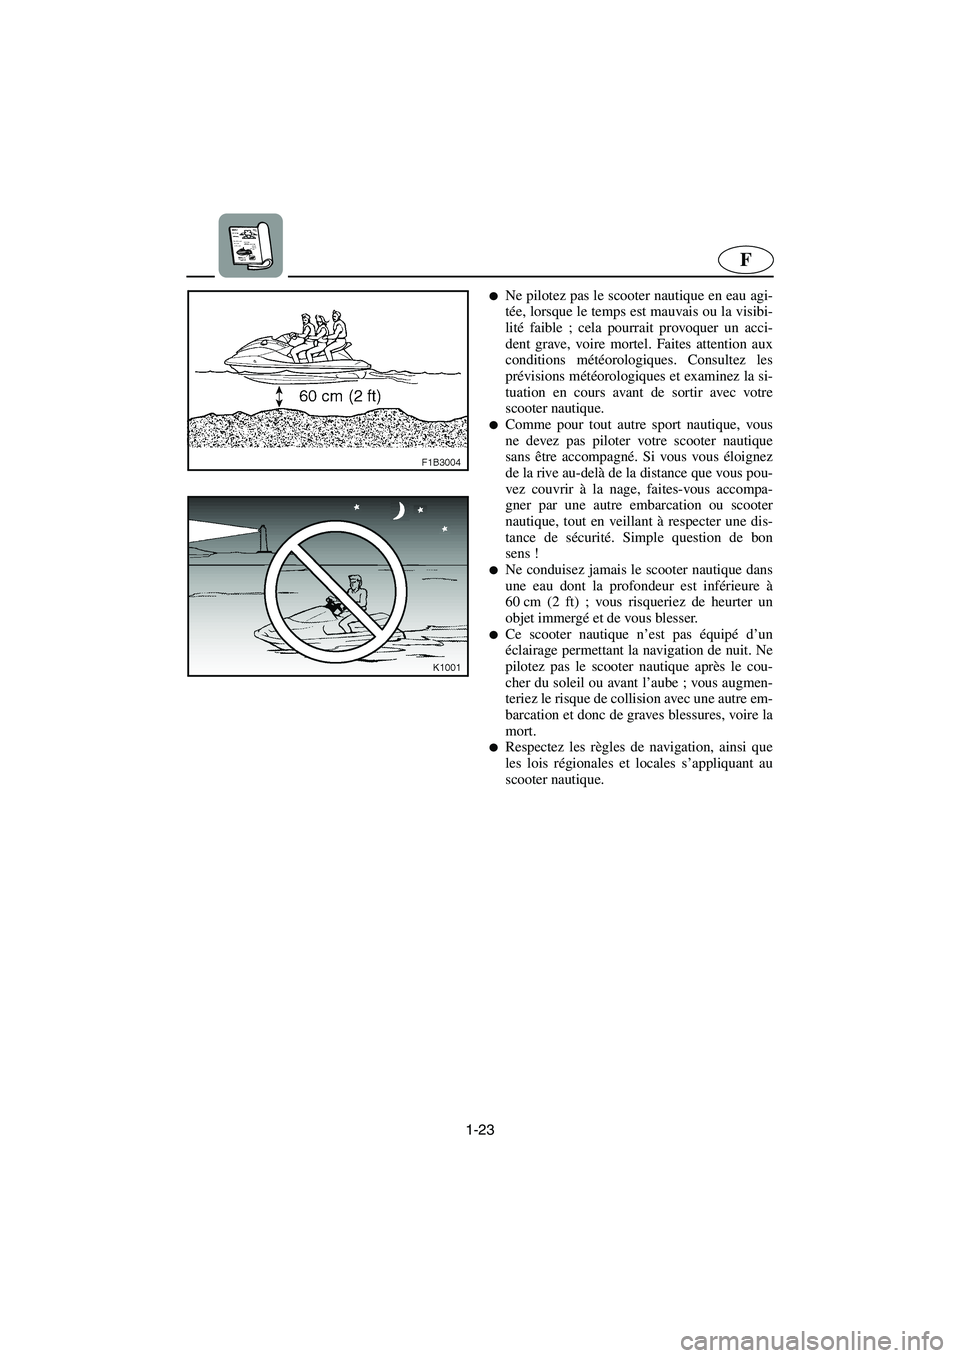 YAMAHA FX CRUISER 2006  Manuale de Empleo (in Spanish) 1-23
F
Ne pilotez pas le scooter nautique en eau agi-
tée, lorsque le temps est mauvais ou la visibi-
lité faible ; cela pourrait provoquer un acci-
dent grave, voire mortel. Faites attention aux
c